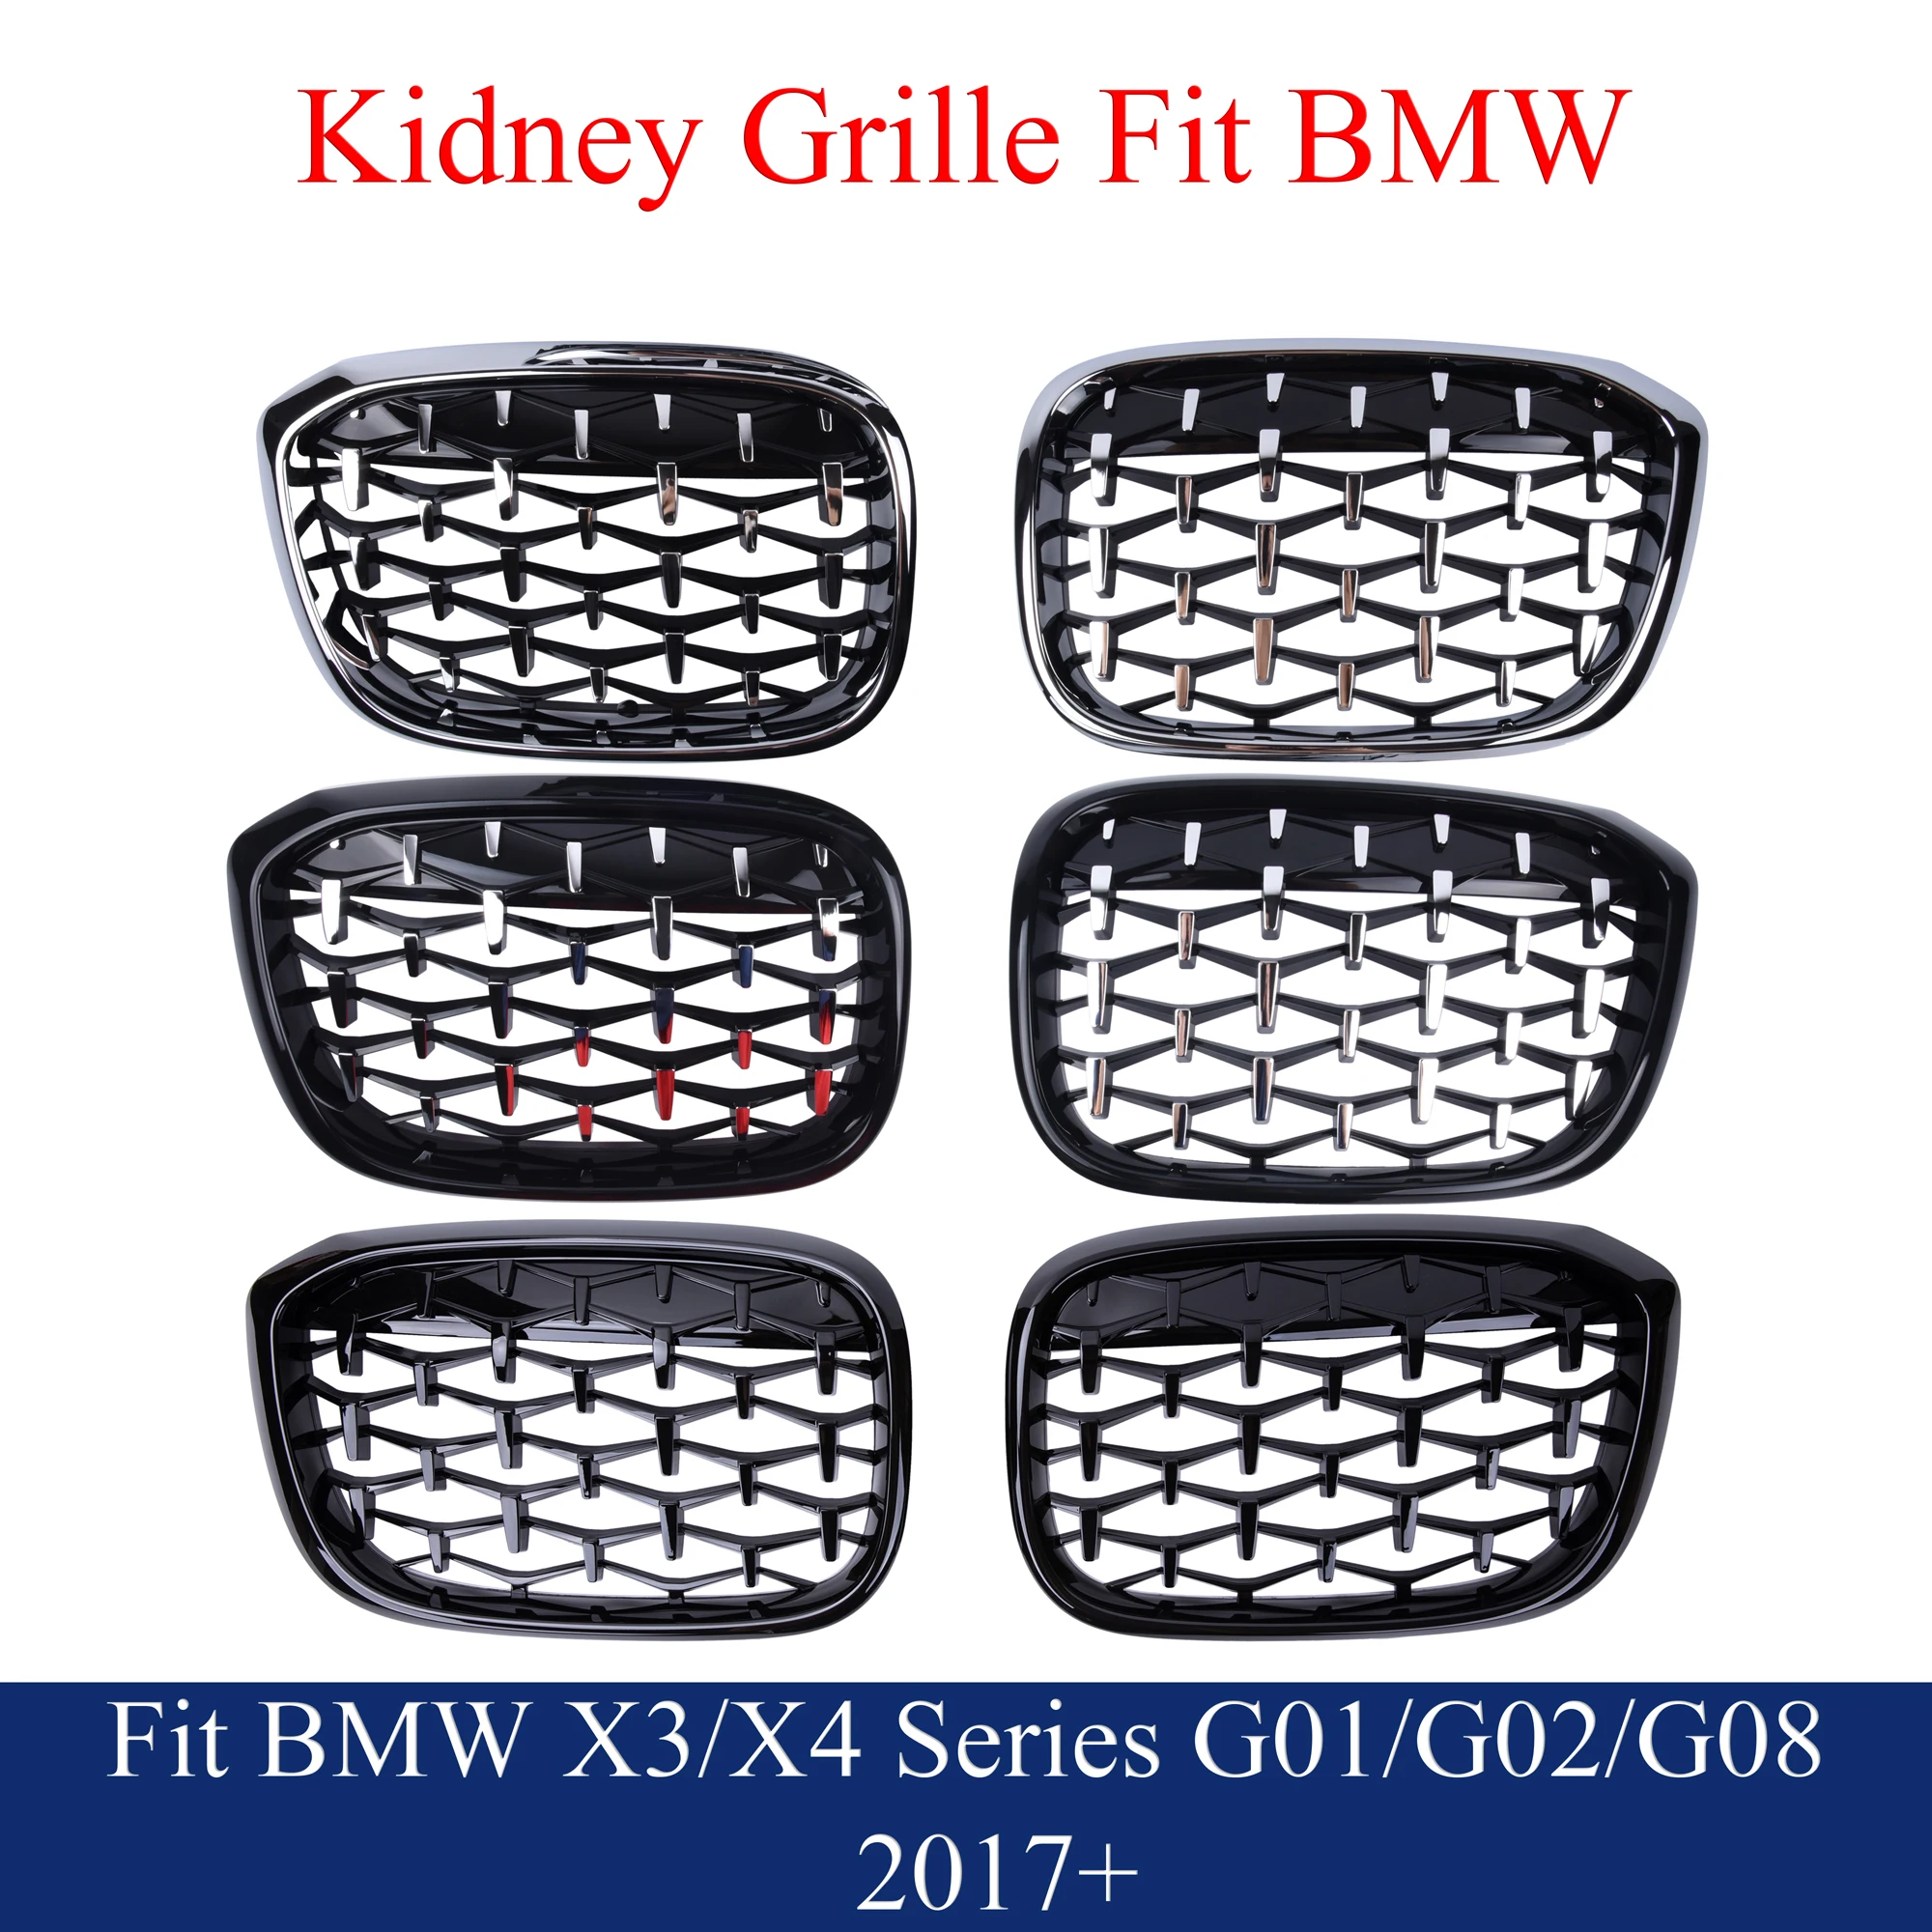 Chrome Diamond Front Kidney Grill Gloss Black Fit  2017+ BMW X3 G01 X4 G02 SeriessDrive20i 18d xDrive20i 28i 30i 20d 25d 30d